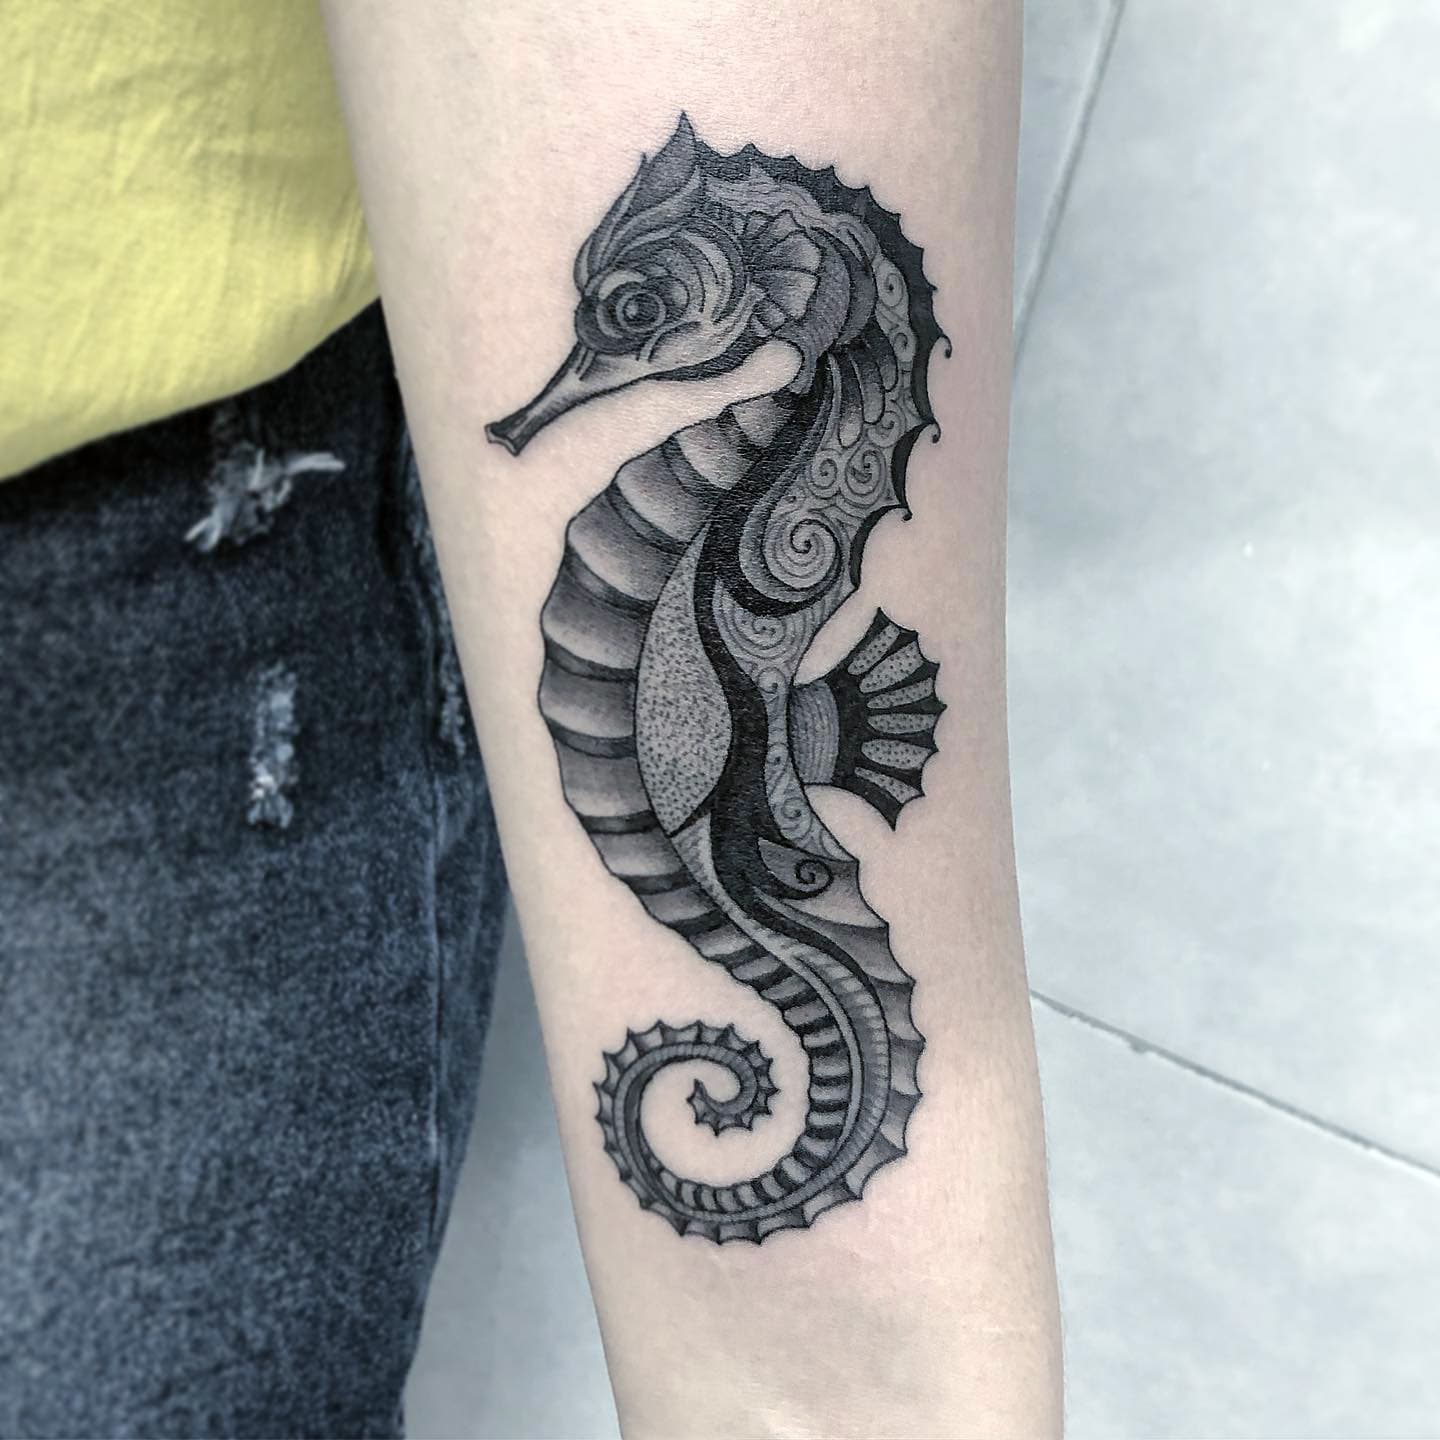 Tatuaje de un caballito de mar en tinta negra